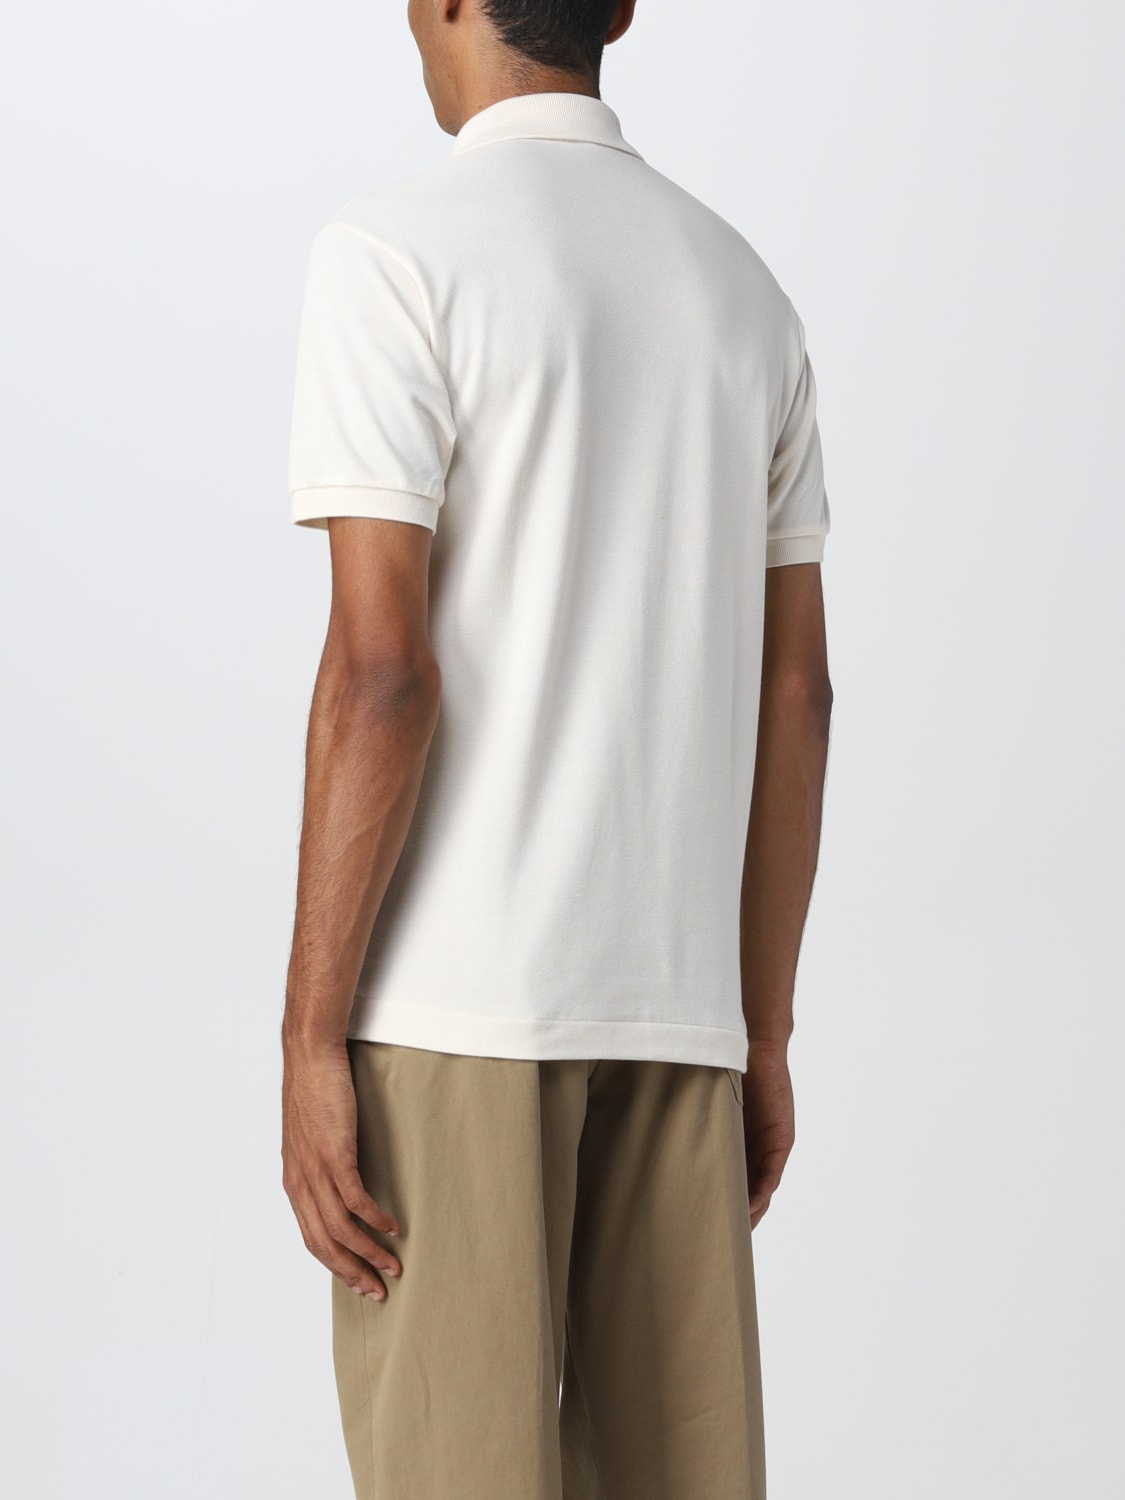 Rytmisk selvbiografi afbrudt LACOSTE: polo shirt for man - Cream | Lacoste polo shirt 1212 online on  GIGLIO.COM